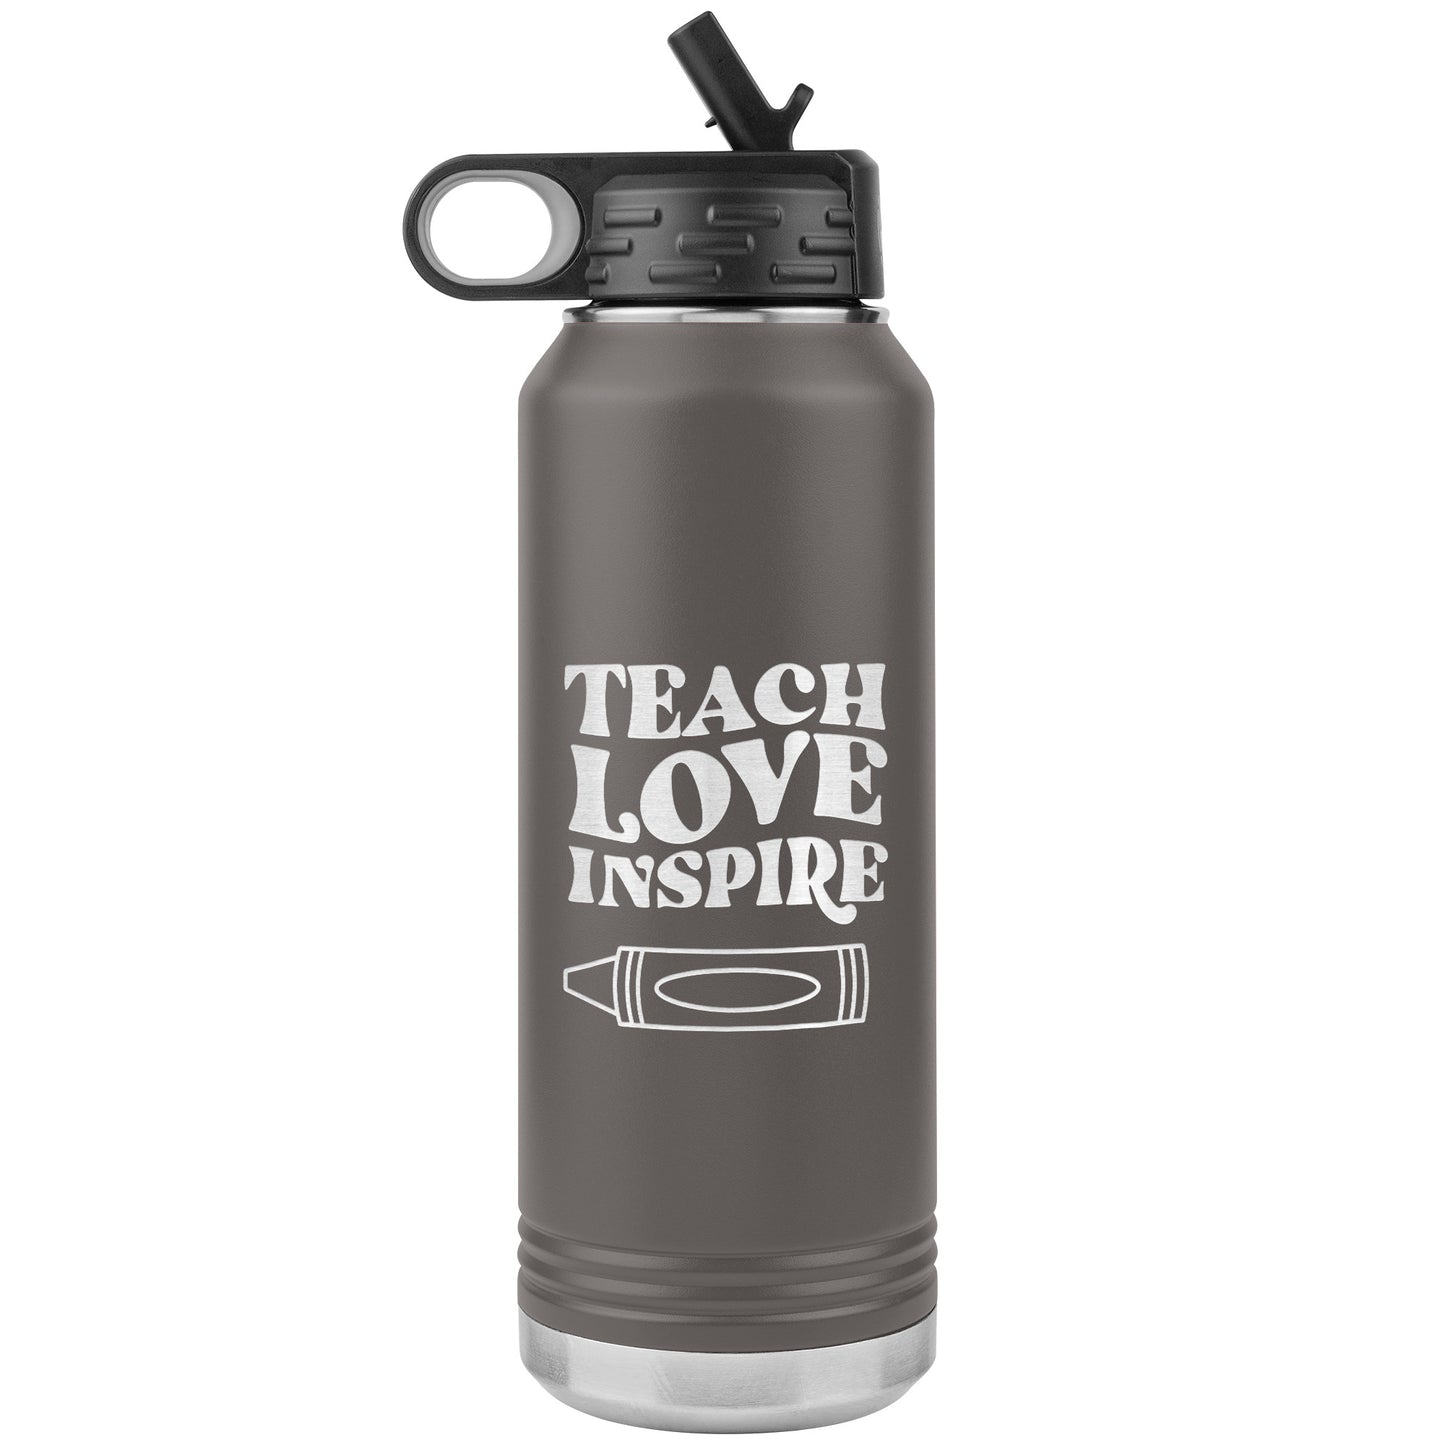 Teach Love Inspire Water Bottle Tumbler